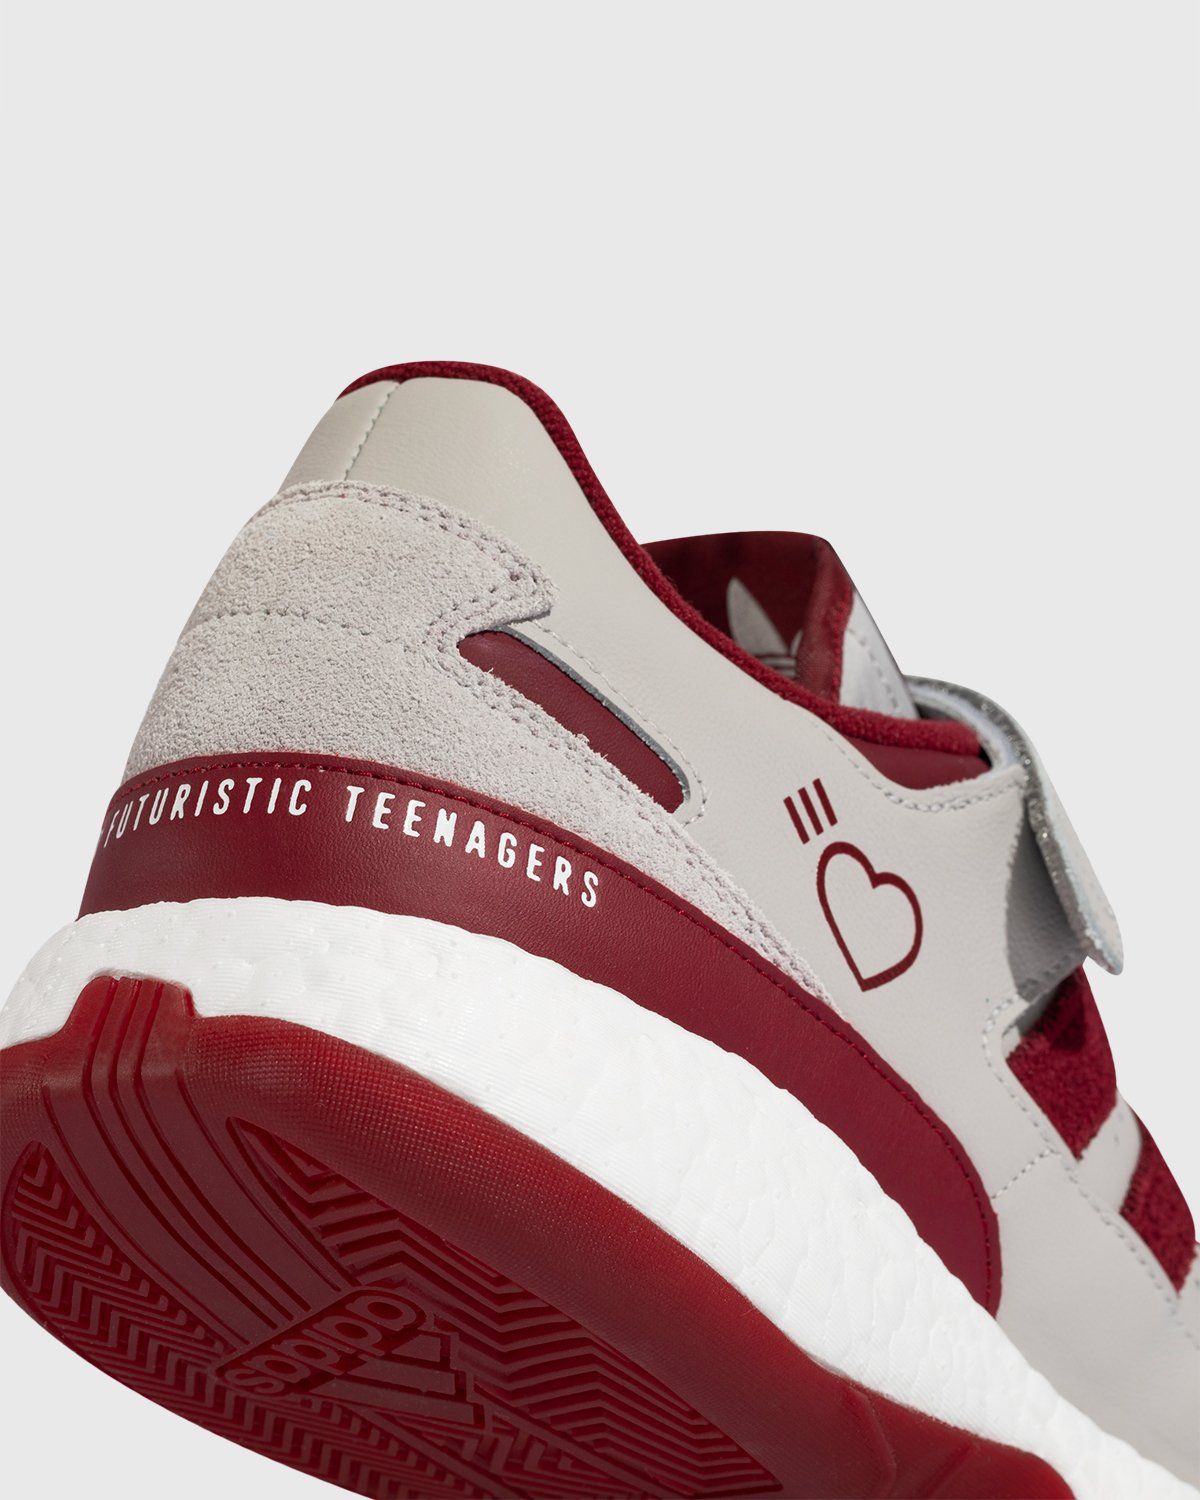 adidas Originals x Human Made – Forum Low Burgundy - Low Top Sneakers - Grey - Image 3